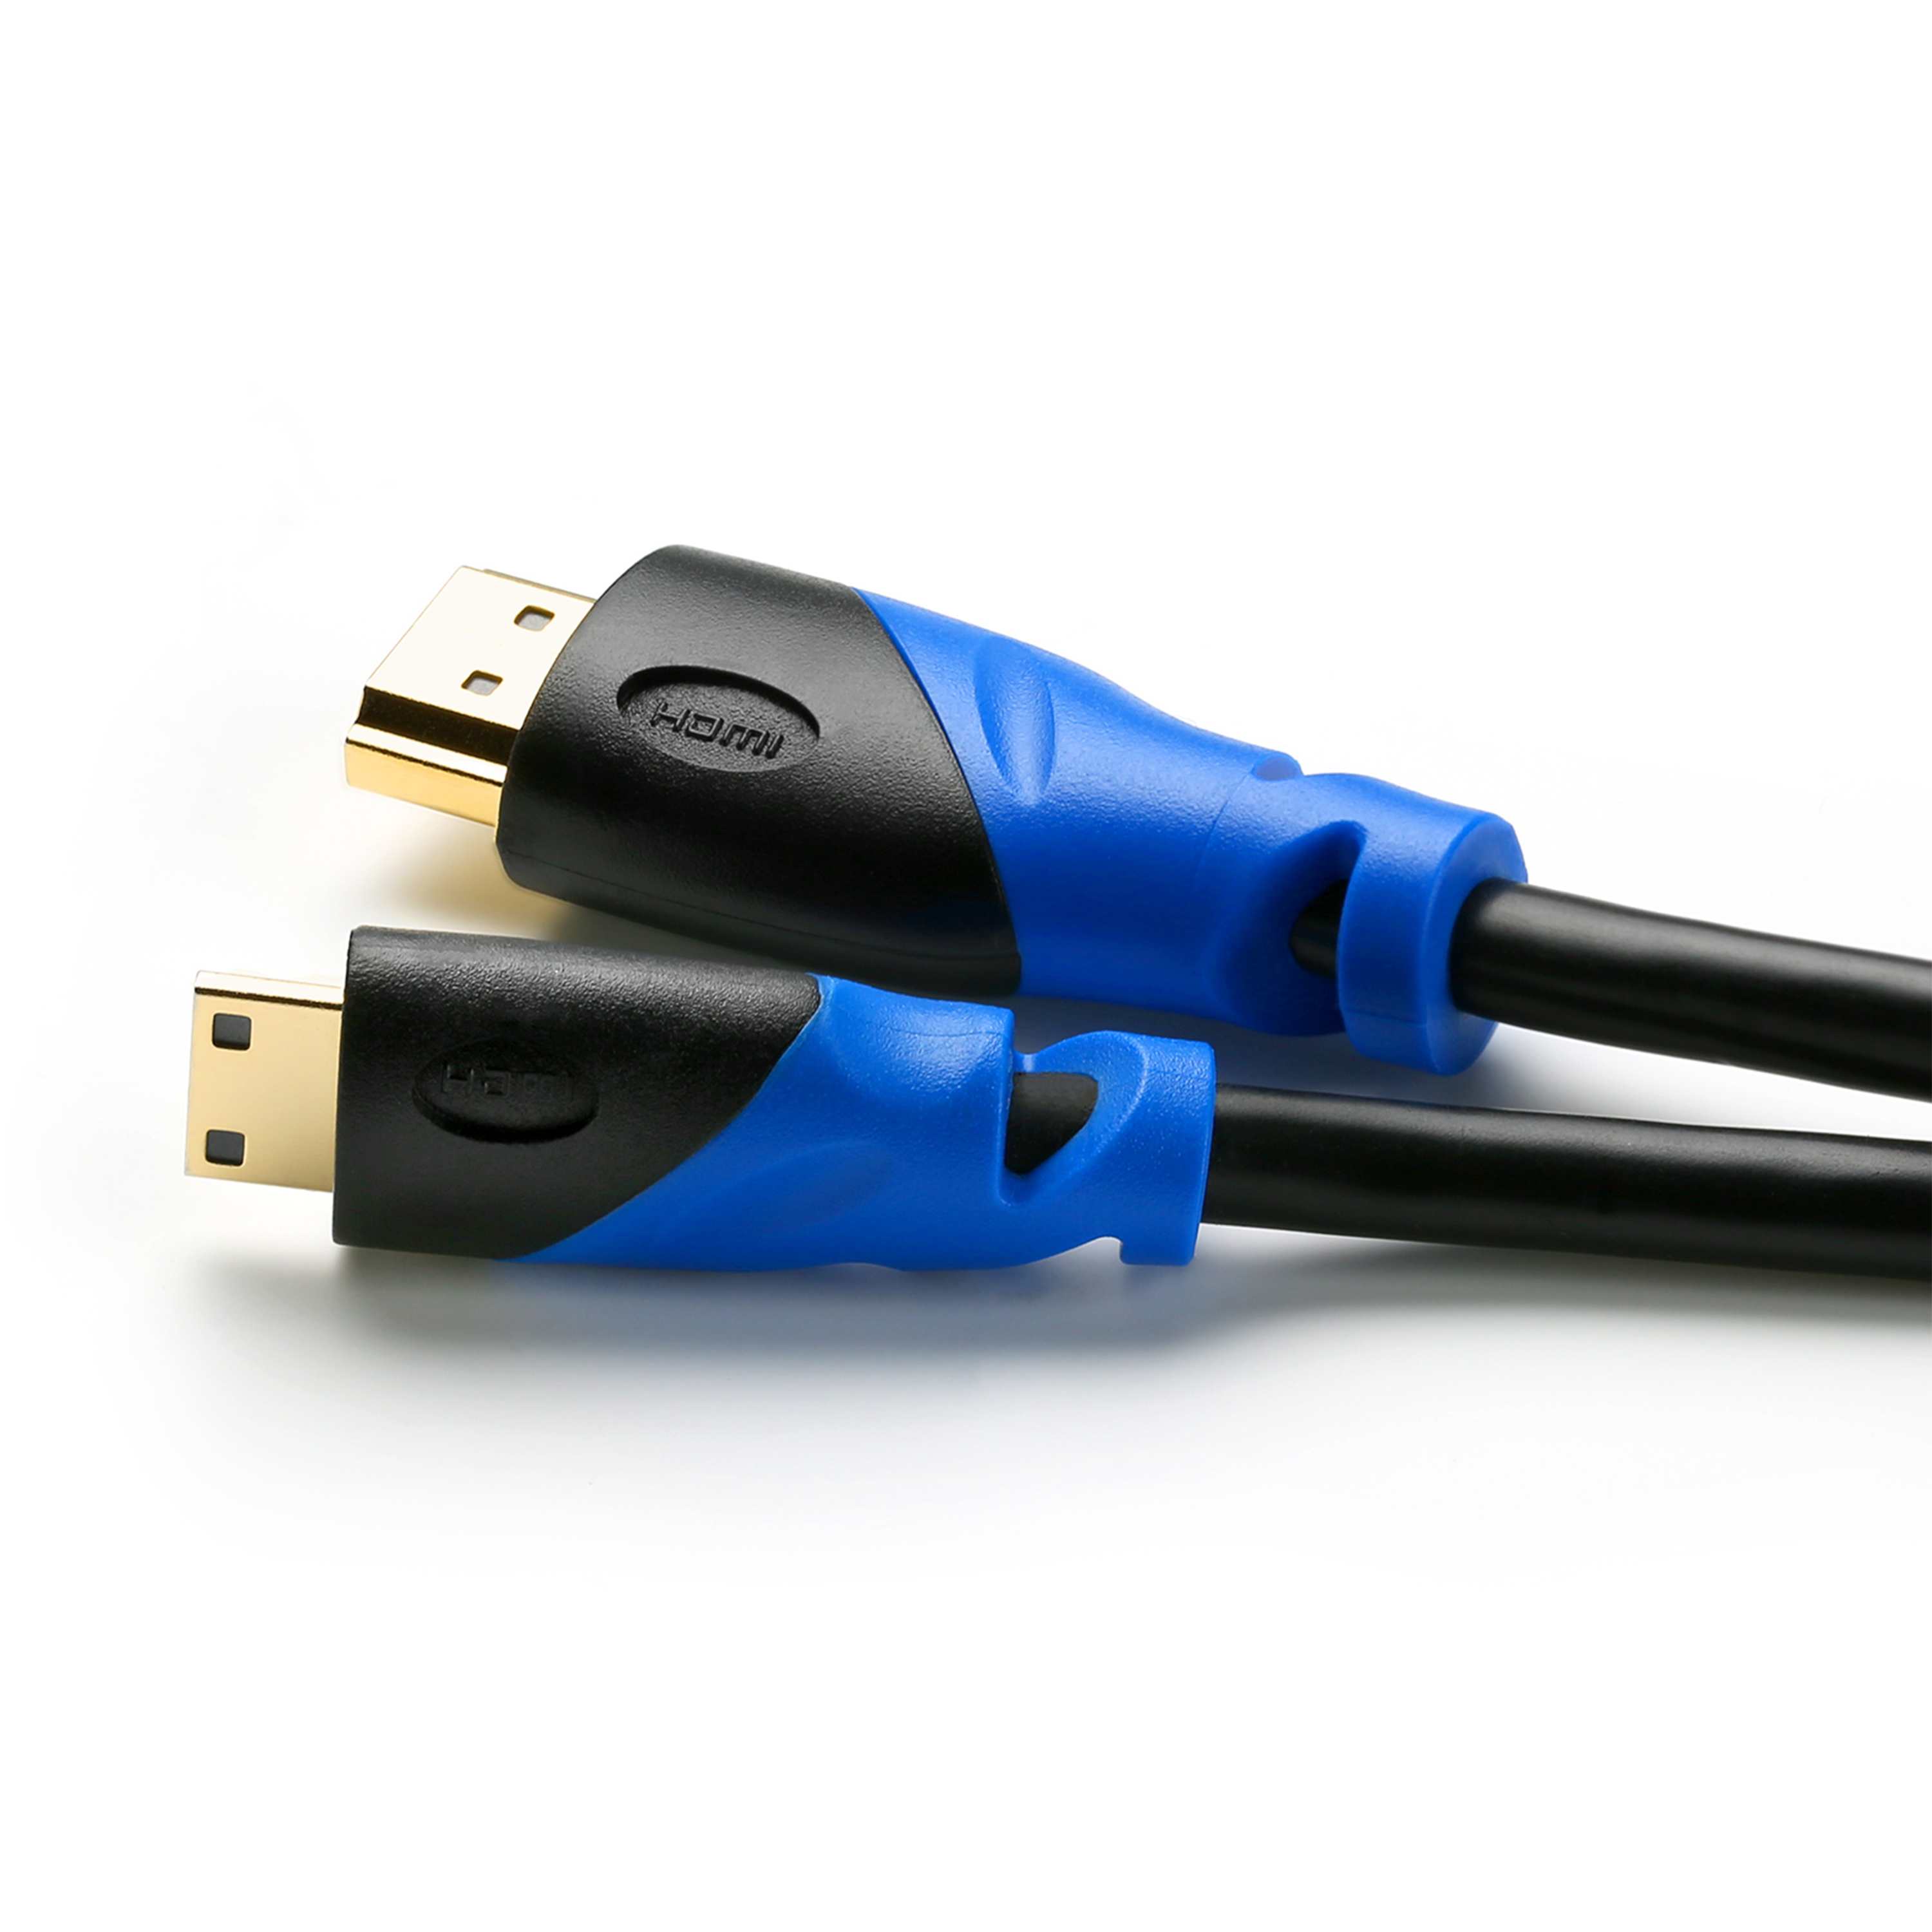 1,5m MiniHDMI Kabel, 2.0 schwarz/blau Kabel, CSL HDMI